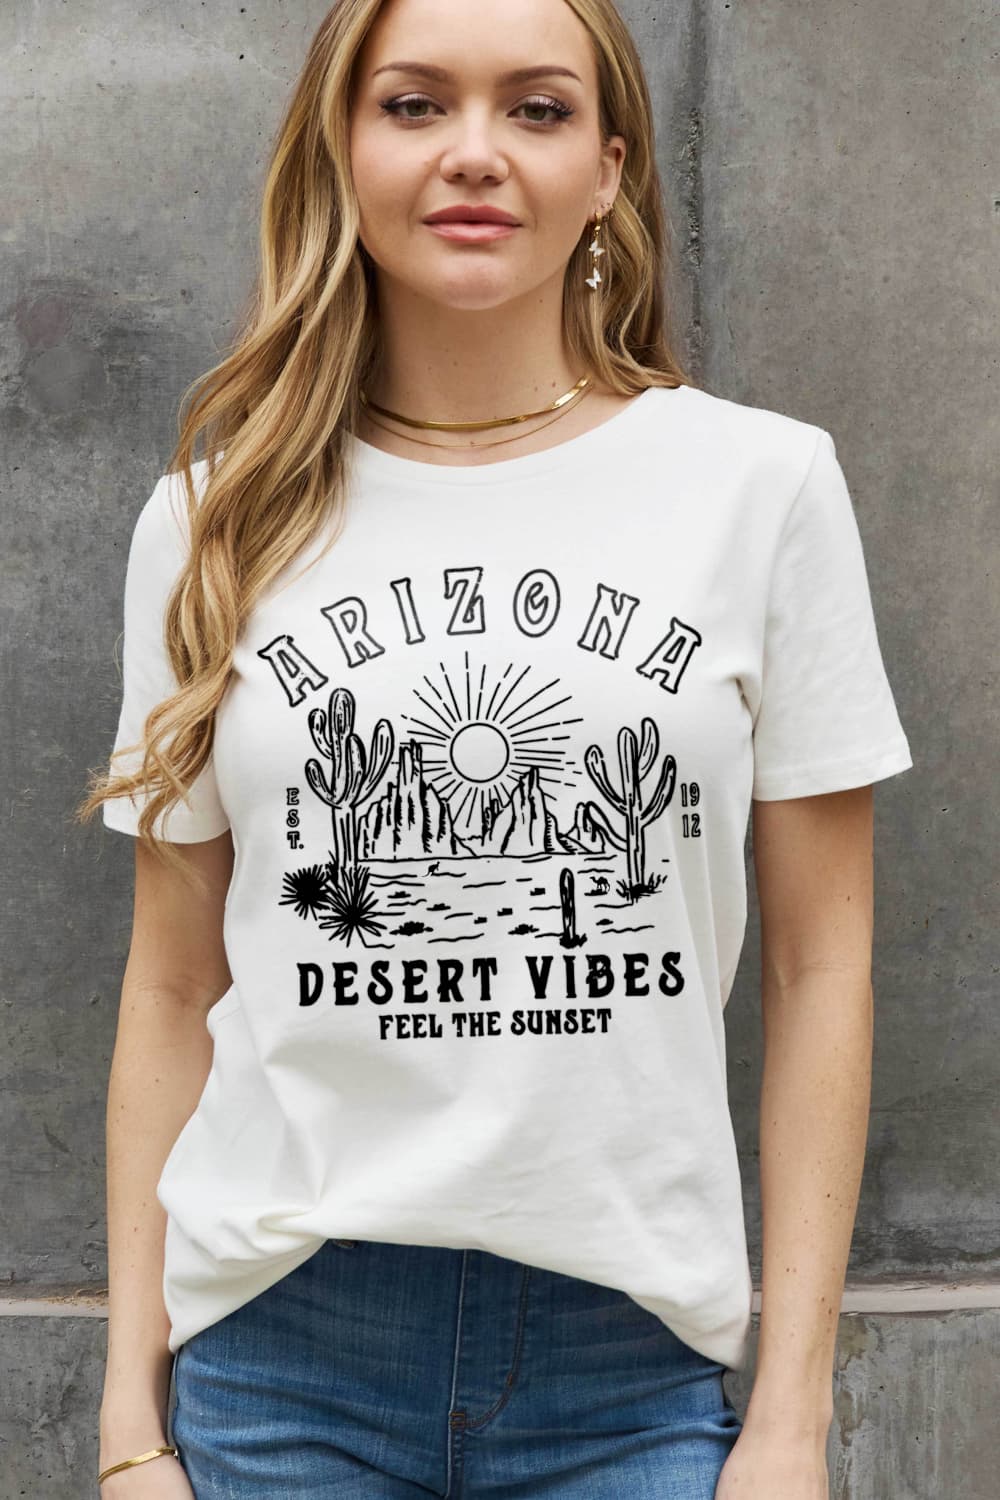 Simply Love Full Size ARIZONA DESERT VIBES FEEL THE SUNSET Graphic Cotton Tee